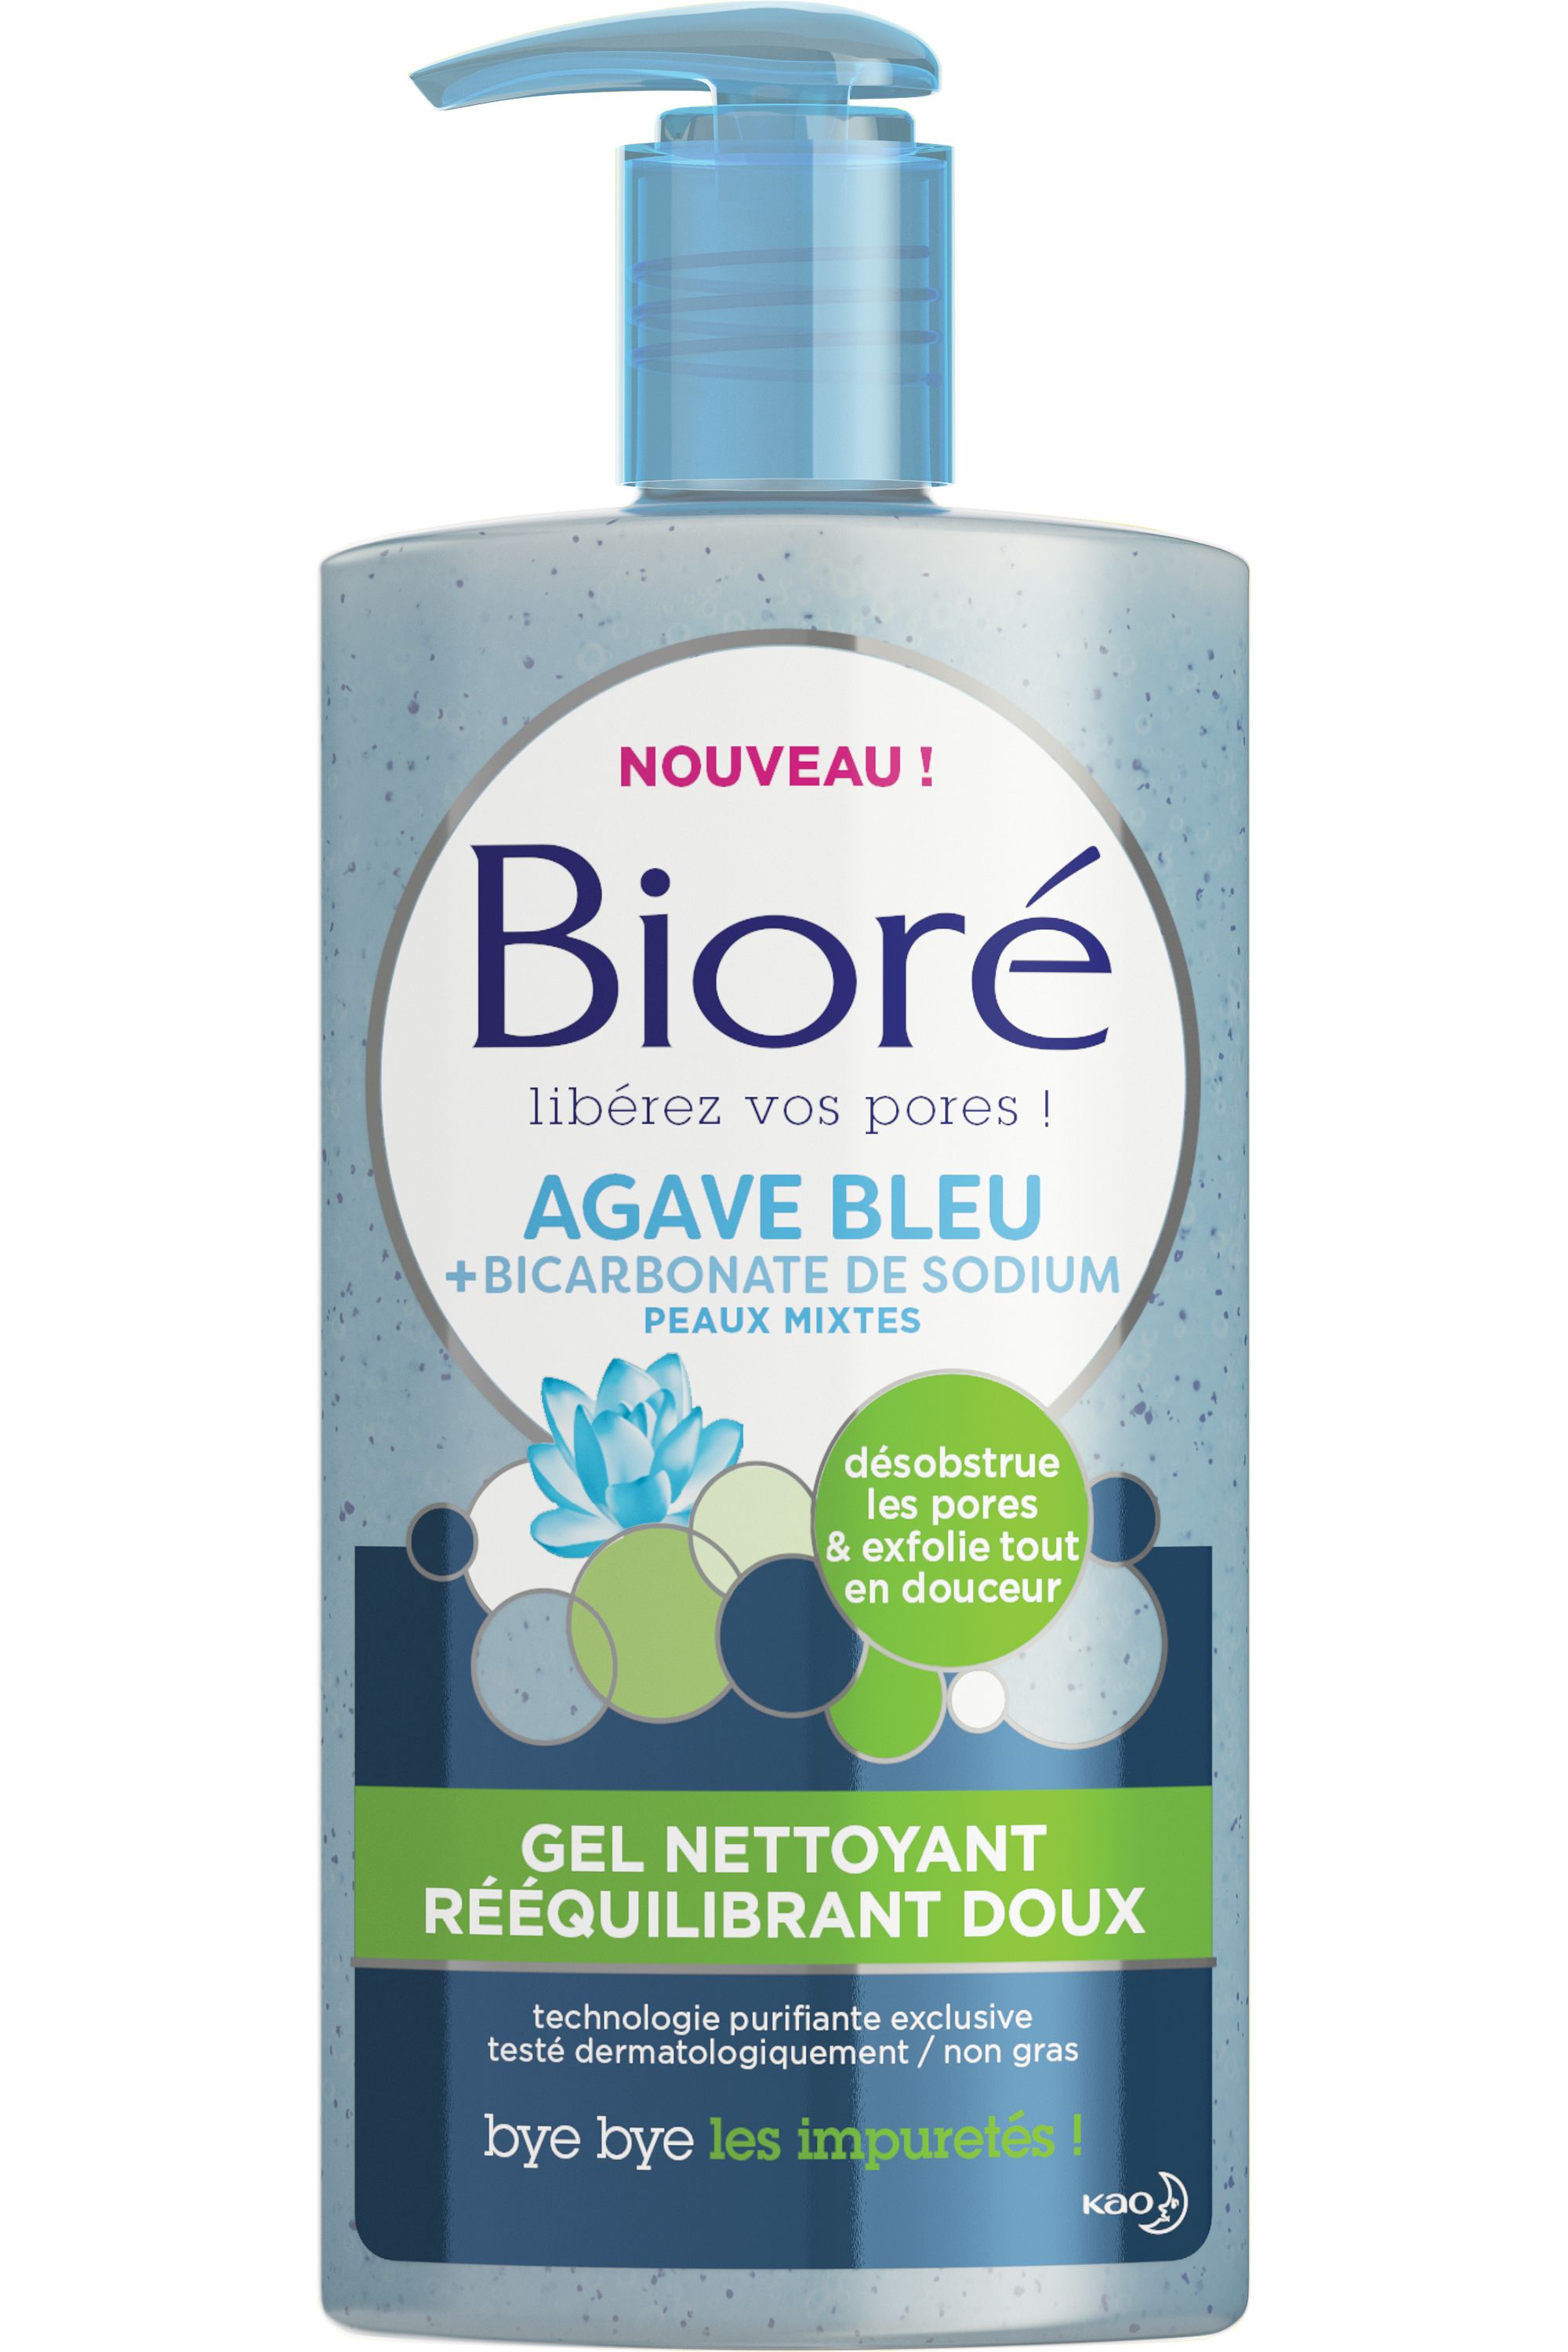 bior-gel-nettoyant-r-quilibrant-doux-l-agave-bleu-blissim-ex